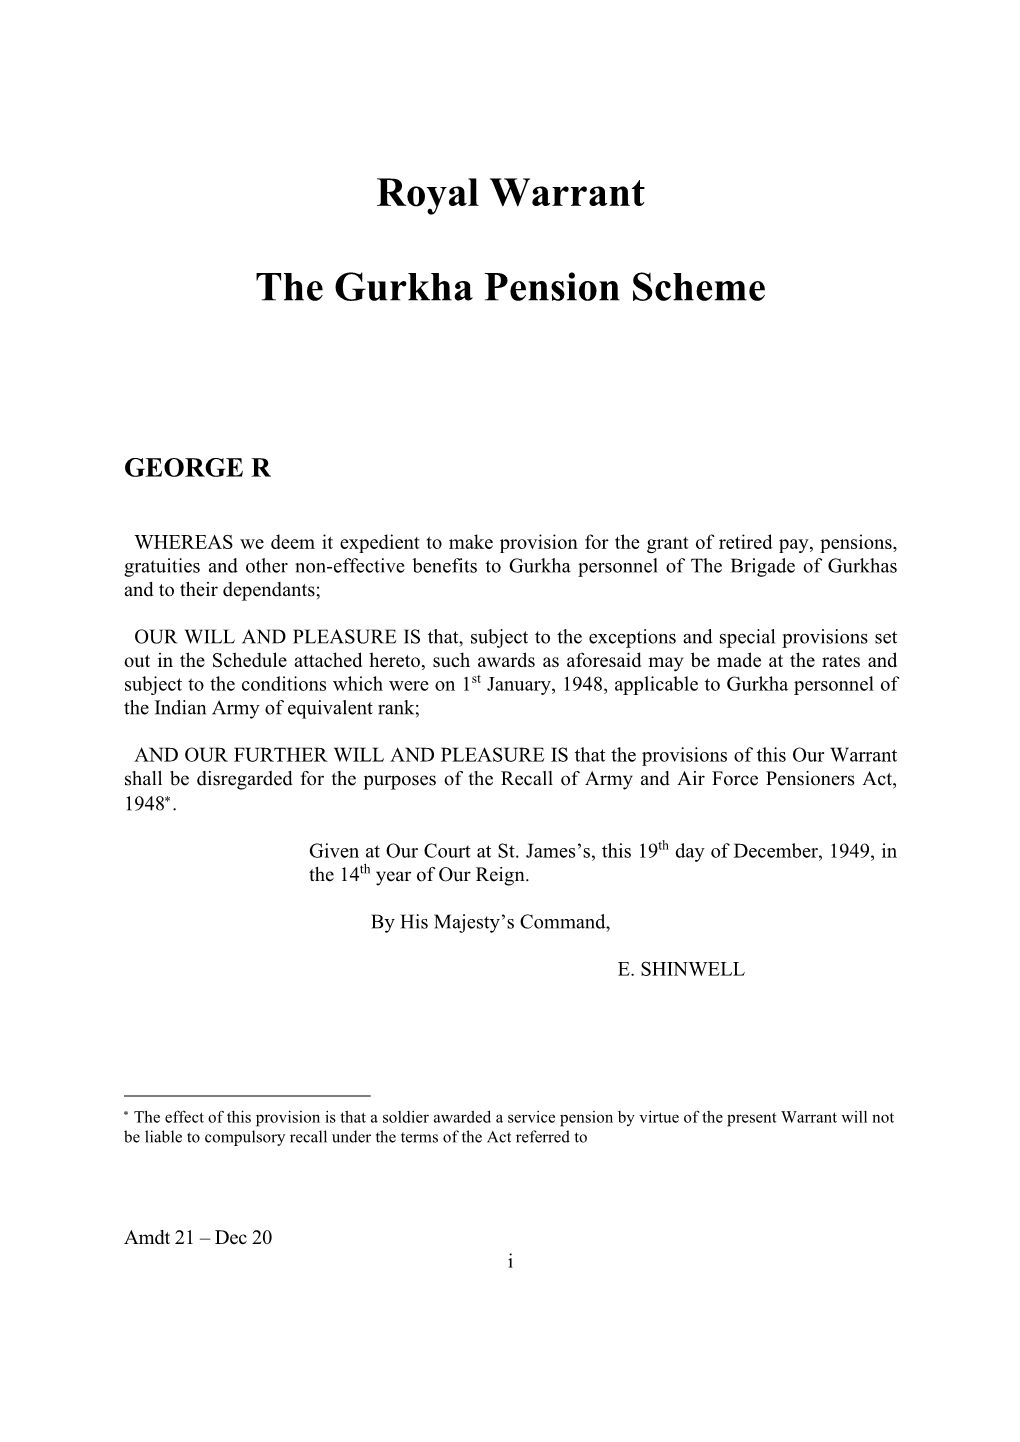 Royal Warrant the Gurkha Pension Scheme